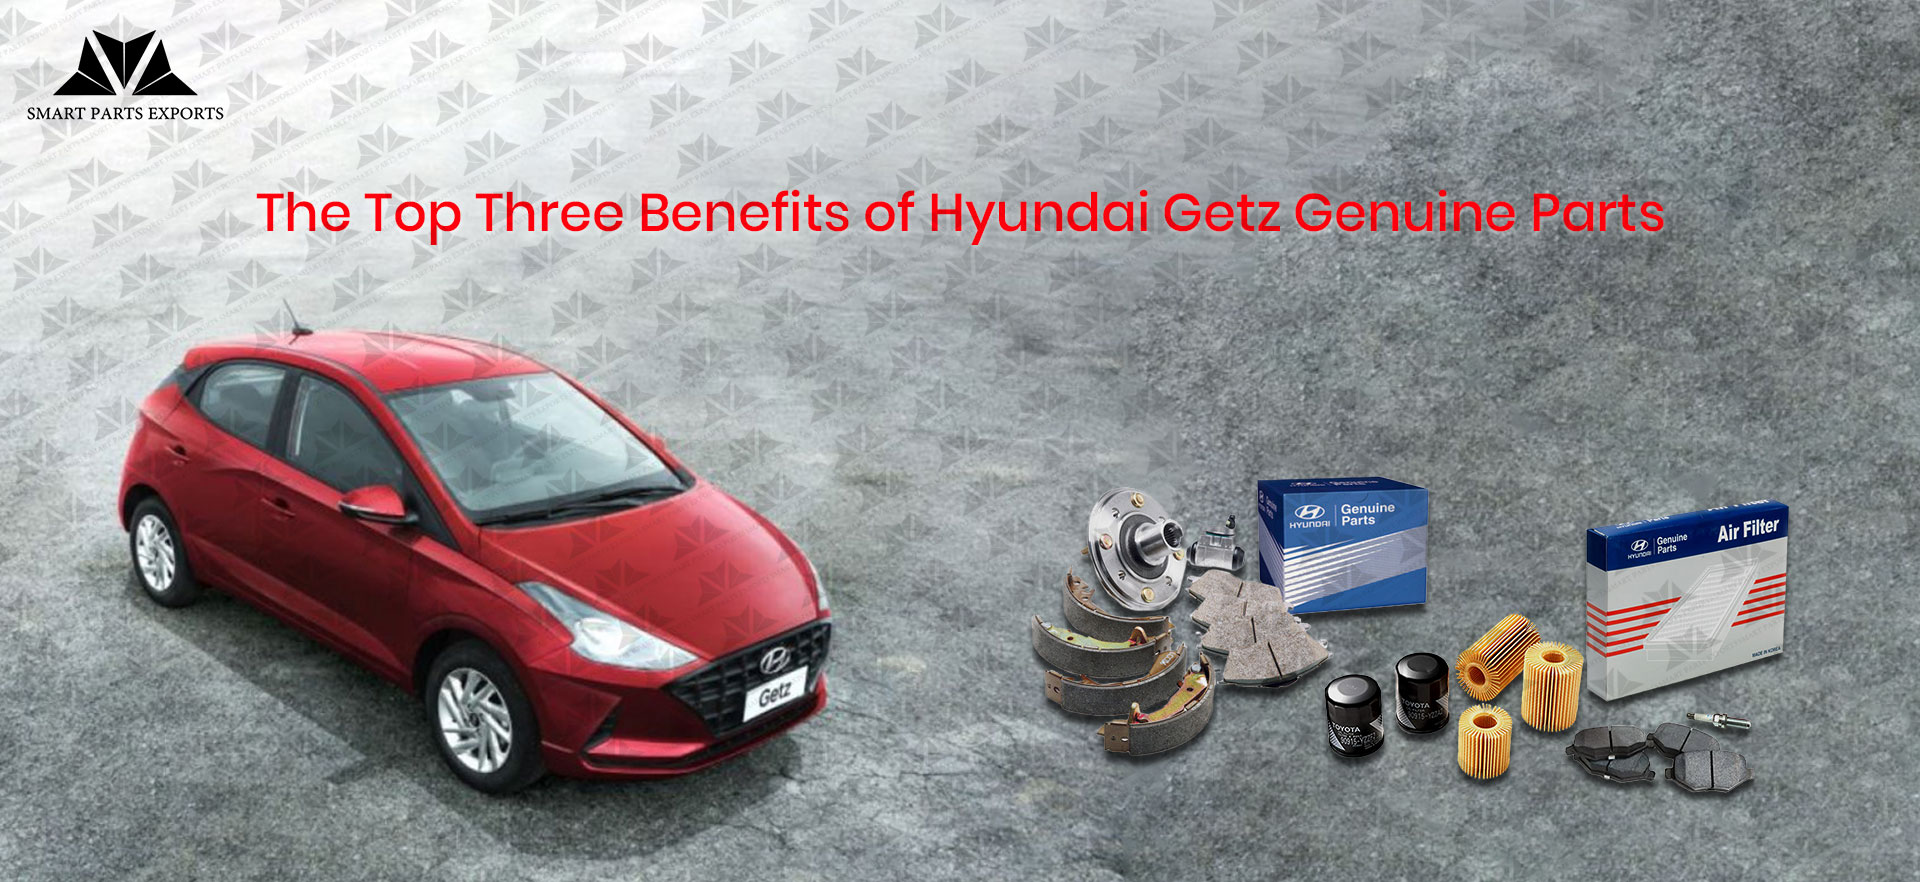 The Top Three Benefits of Hyundai Getz Genuine Parts